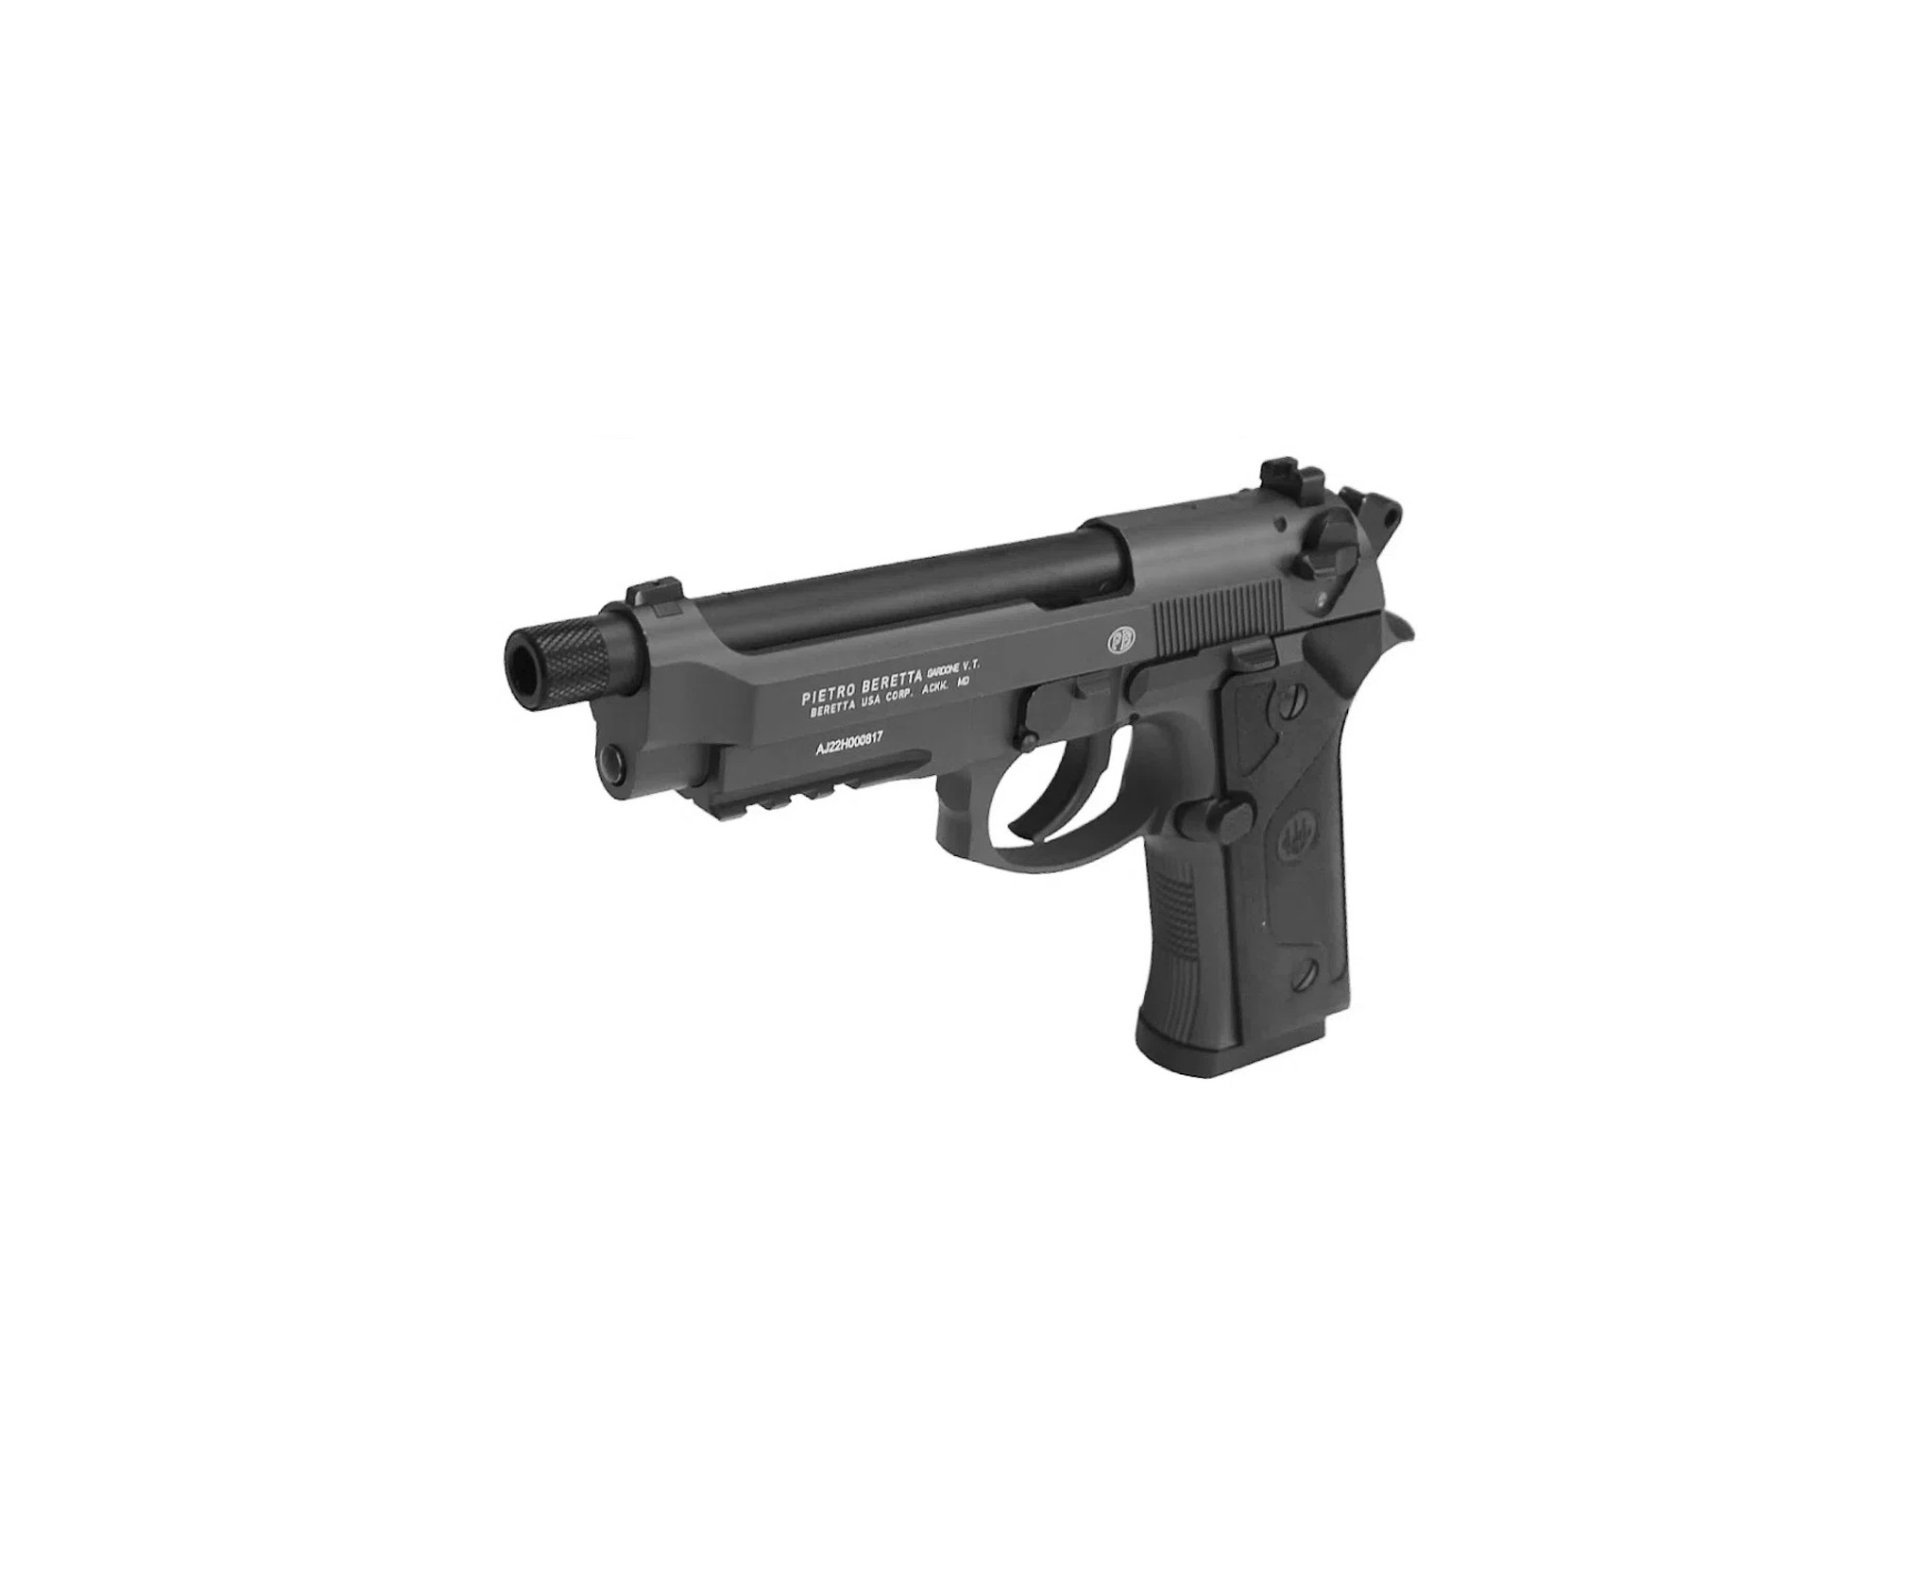 Pistola de Pressão CO2 Beretta M9A3 FM Blowback 4.5 Gray/Black Umarex + Co2 + bbs + Speed Loader